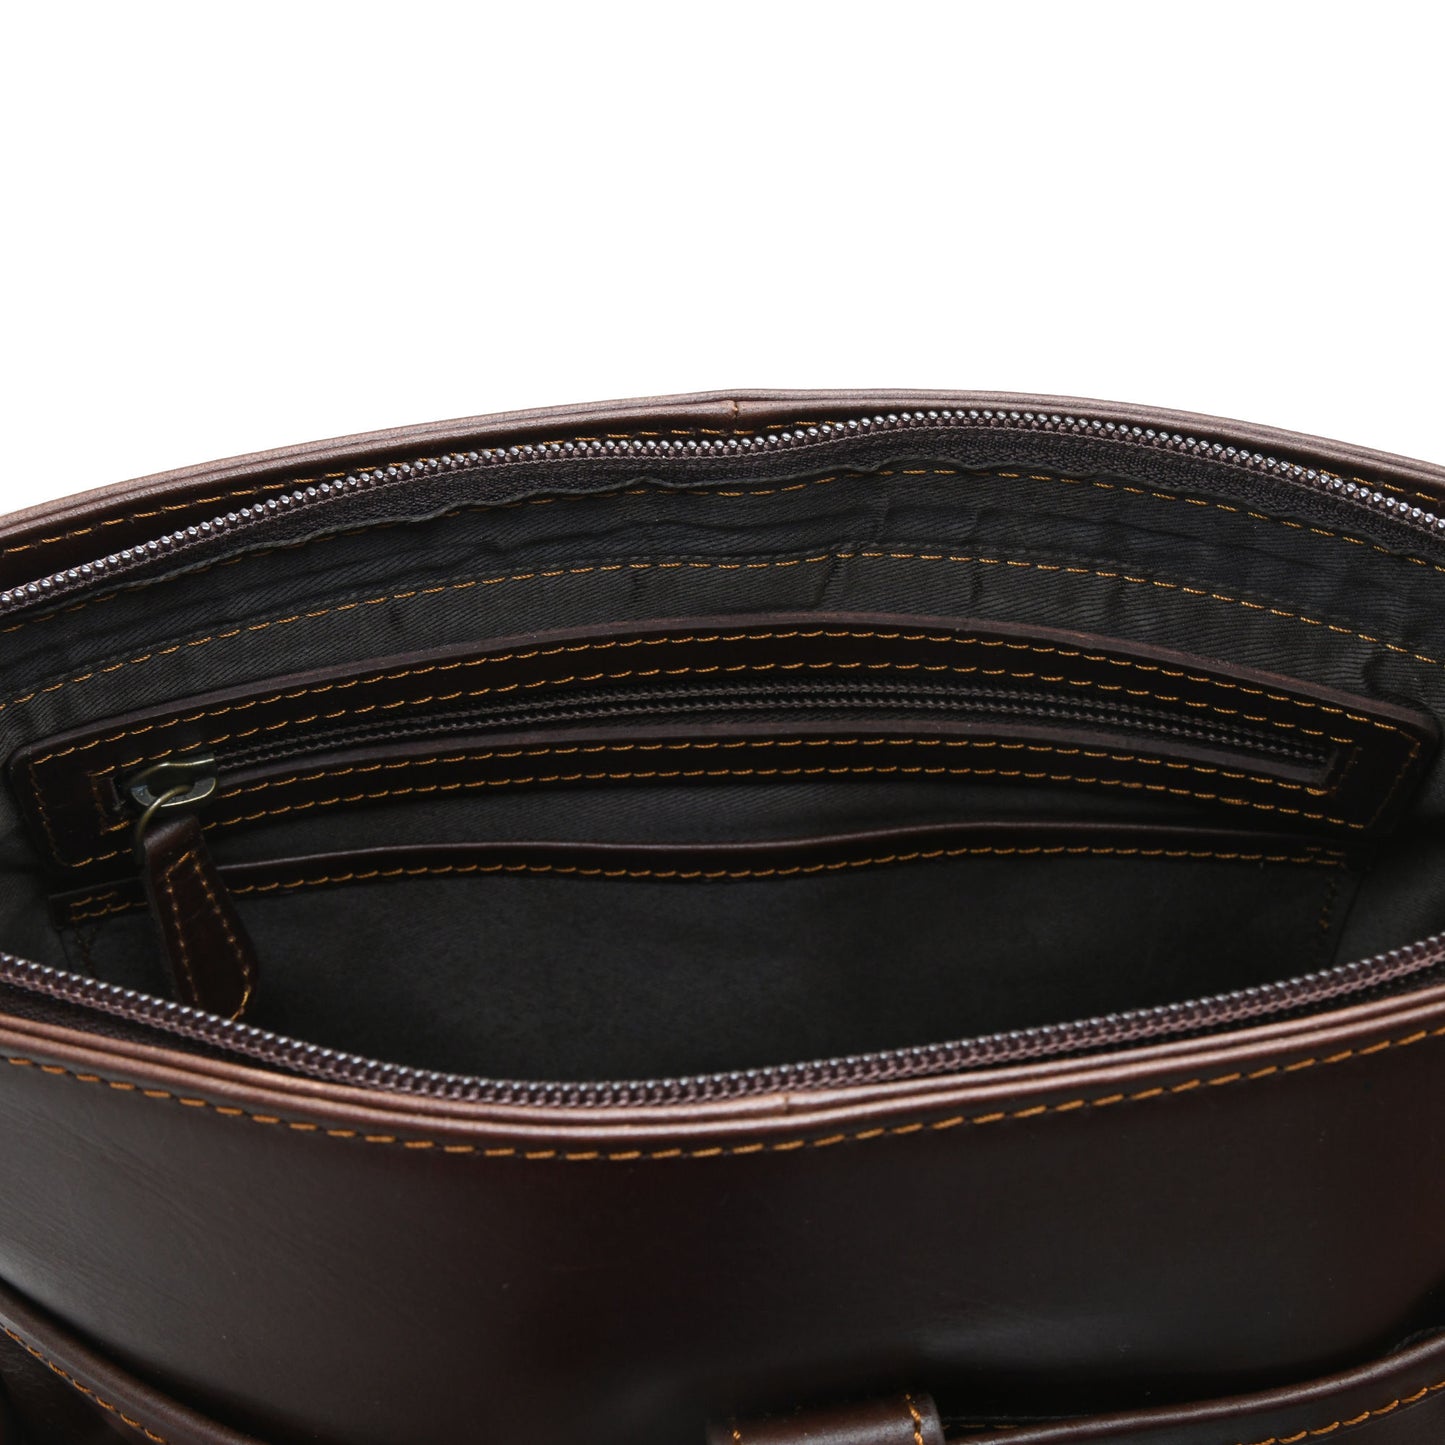 Style n Craft 392001 Cross-body Messenger Bag in Full Grain Dark Brown Leather - Inside Back Wall View showing 1 Zippered Pocket & 1 Slip Pocket 